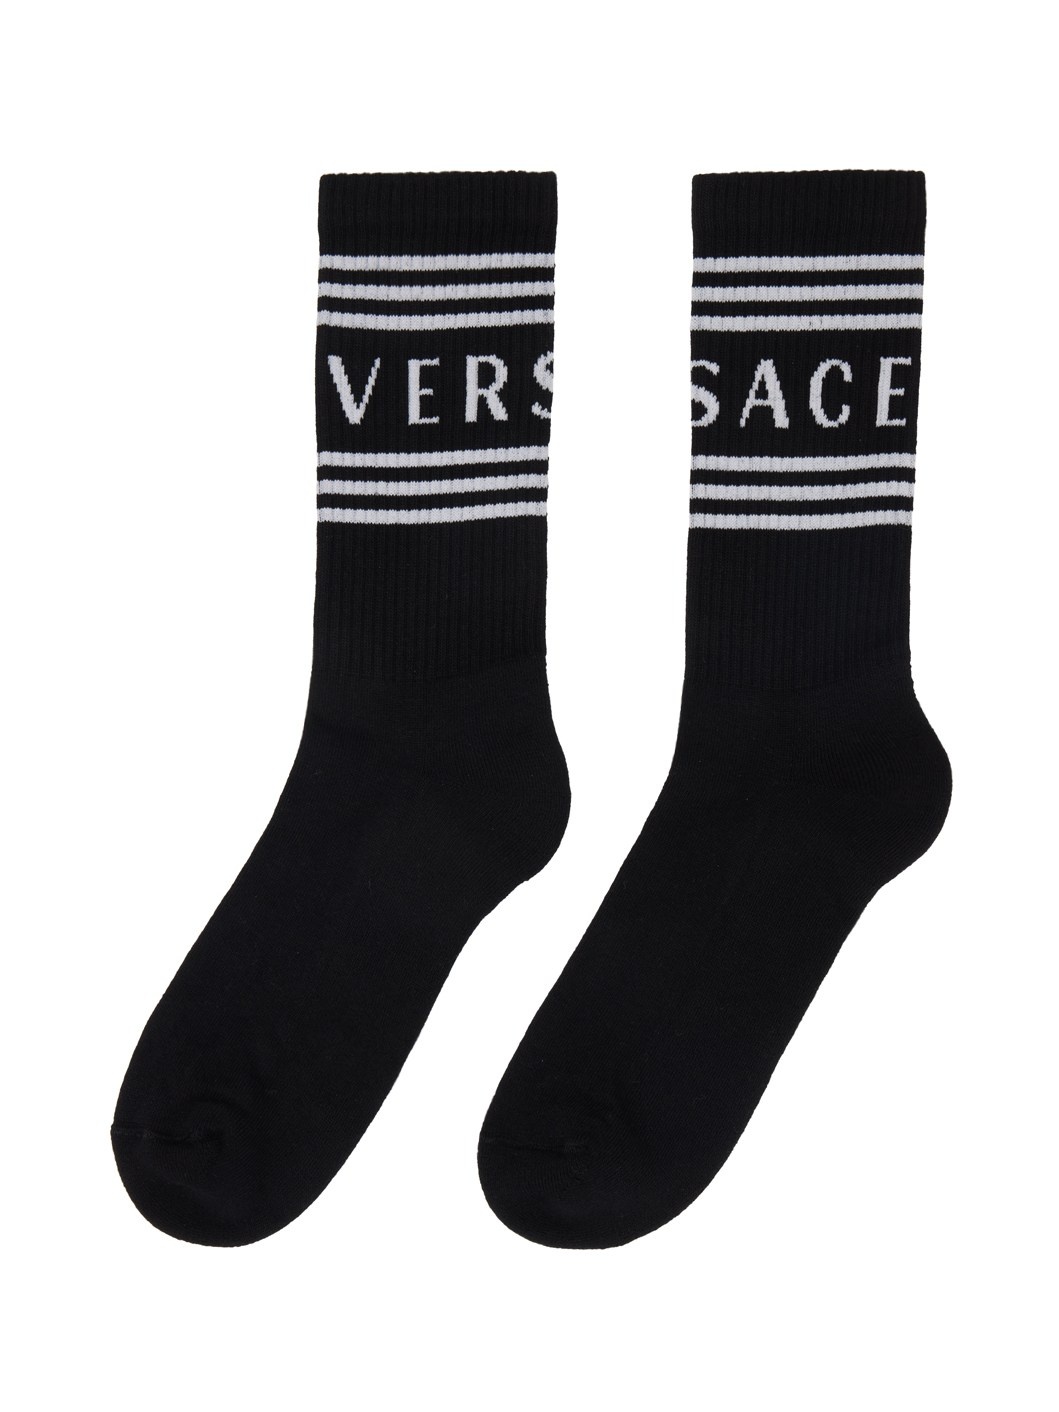 Black & White 90s Vintage Logo Socks - 2